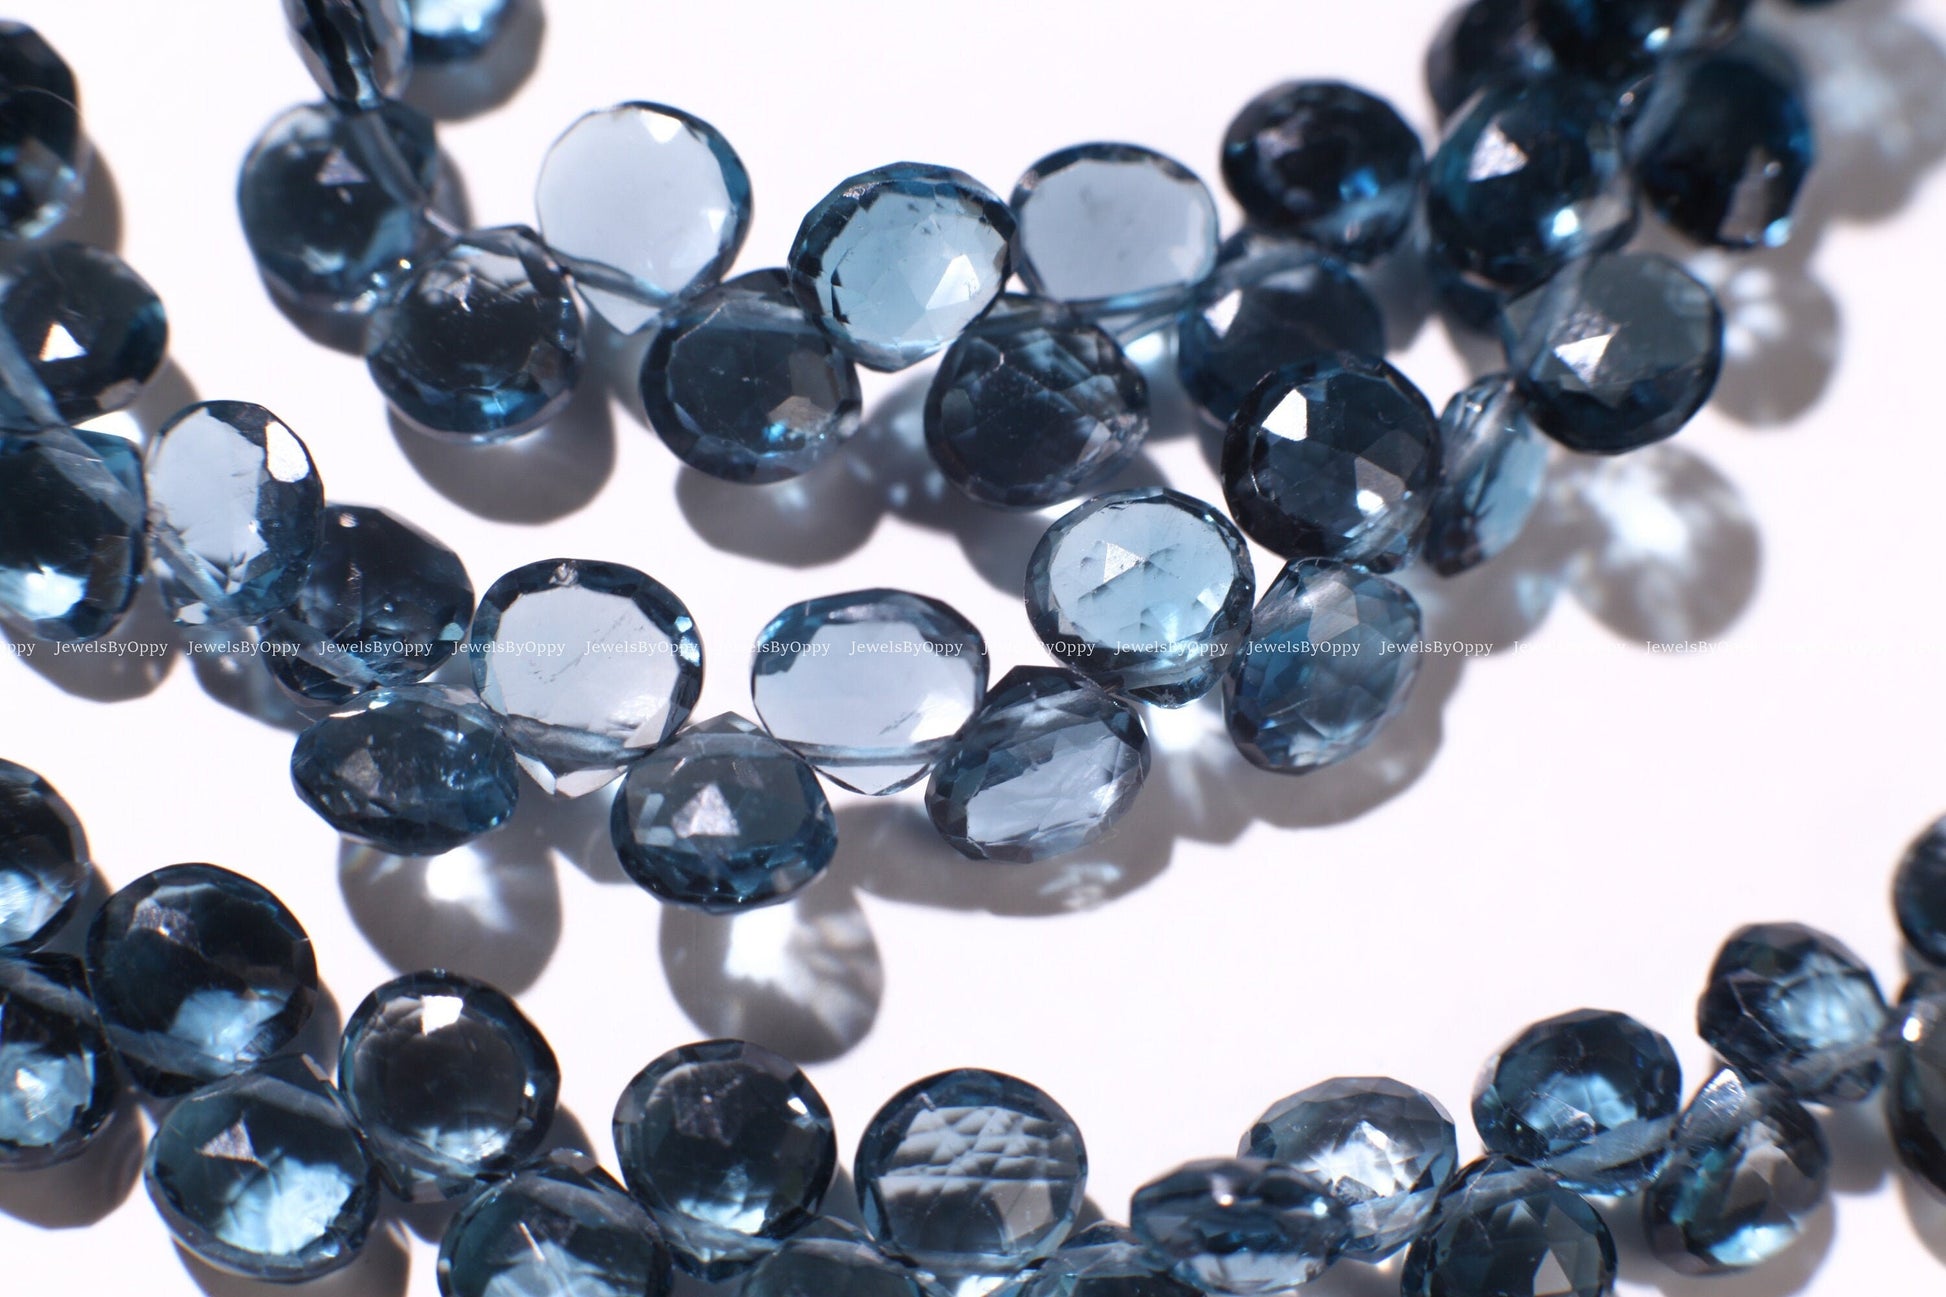 Natural London Blue Topaz heart shape drop 6-6.5mm Faceted Diamond Cut pear drop Beads, High Quality Natural London Blue Topaz.